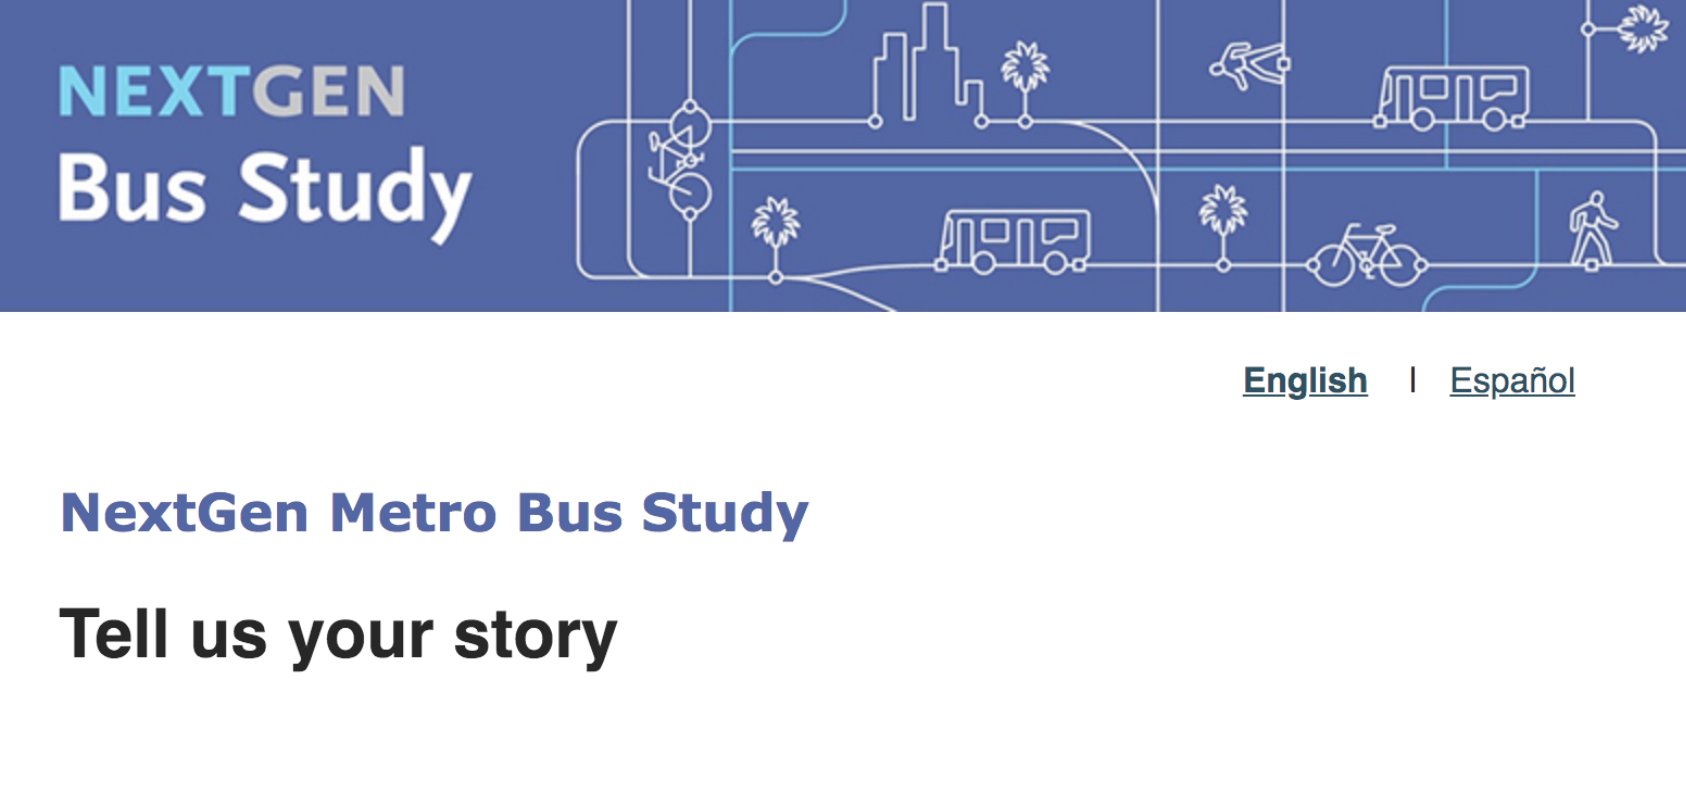 Take the NextGen Bus Study survey